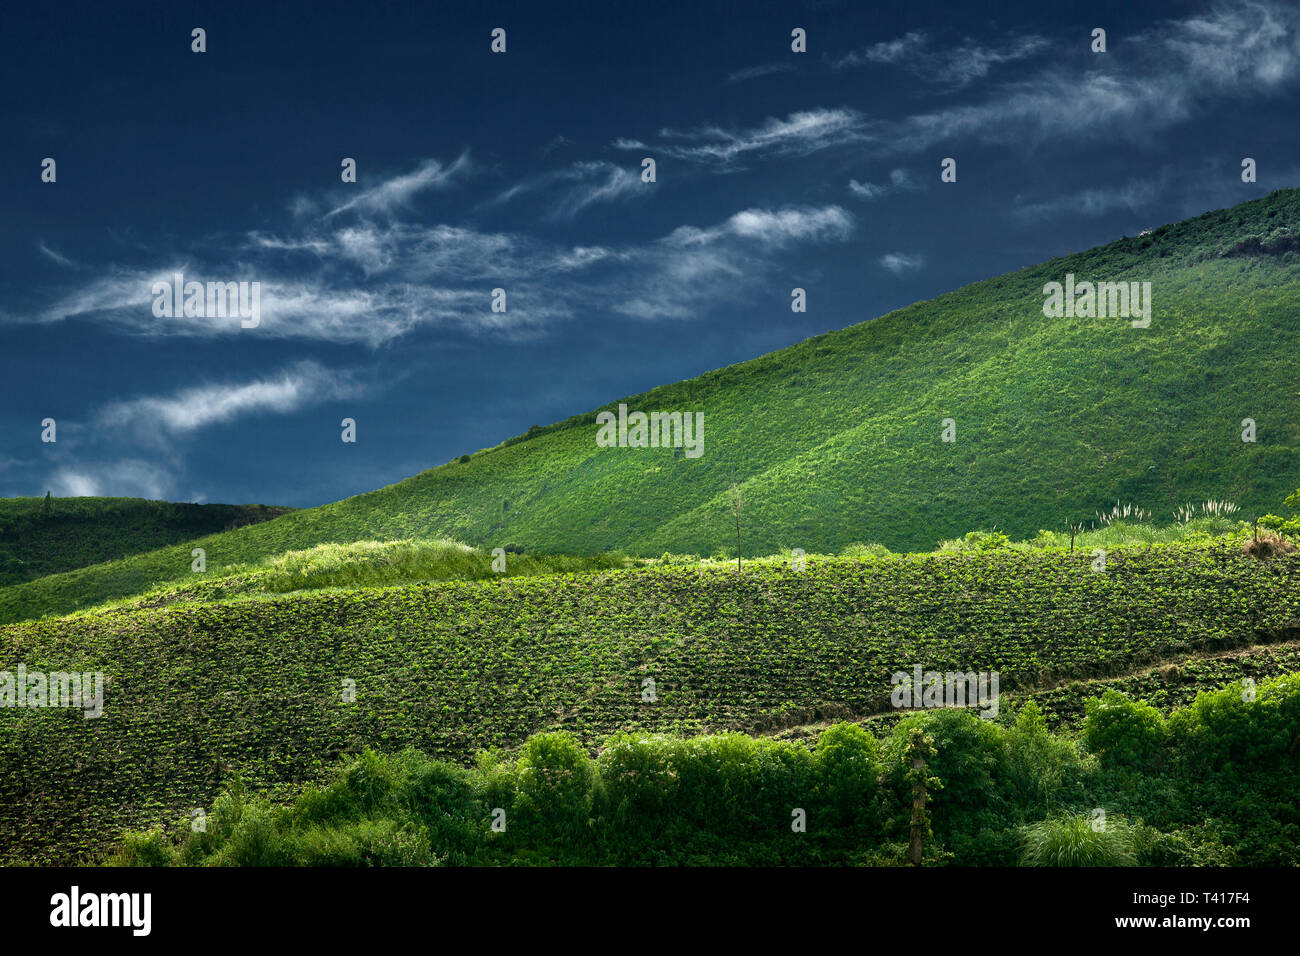 Tropical mountain landscape, Indonesia Stock Photo